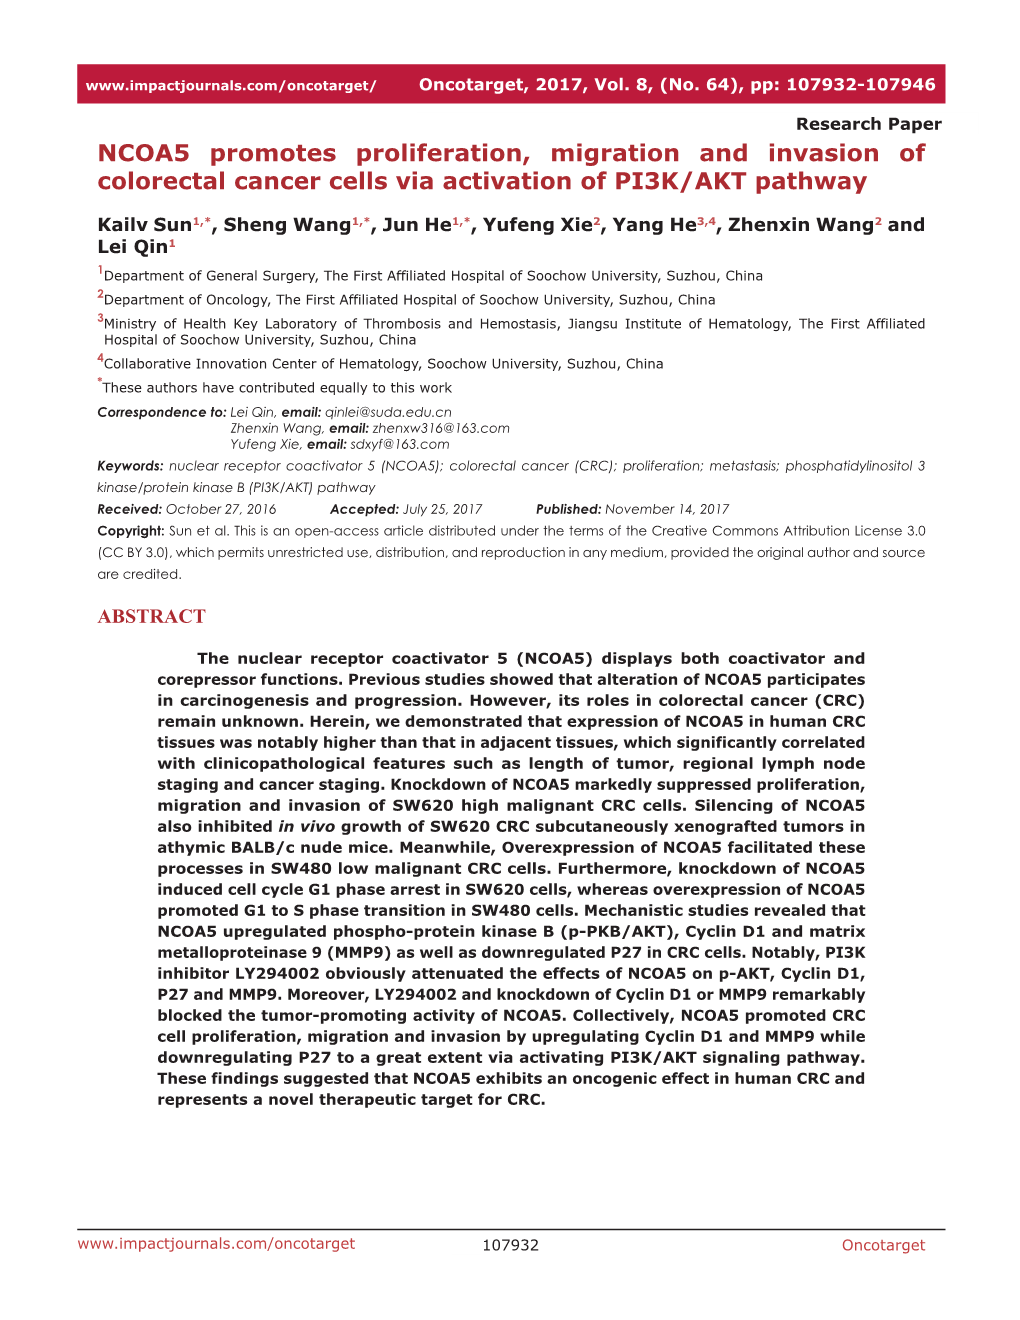 NCOA5 Promotes Proliferation, Migration and Invasion of Colorectal Cancer Cells Via Activation of PI3K/AKT Pathway